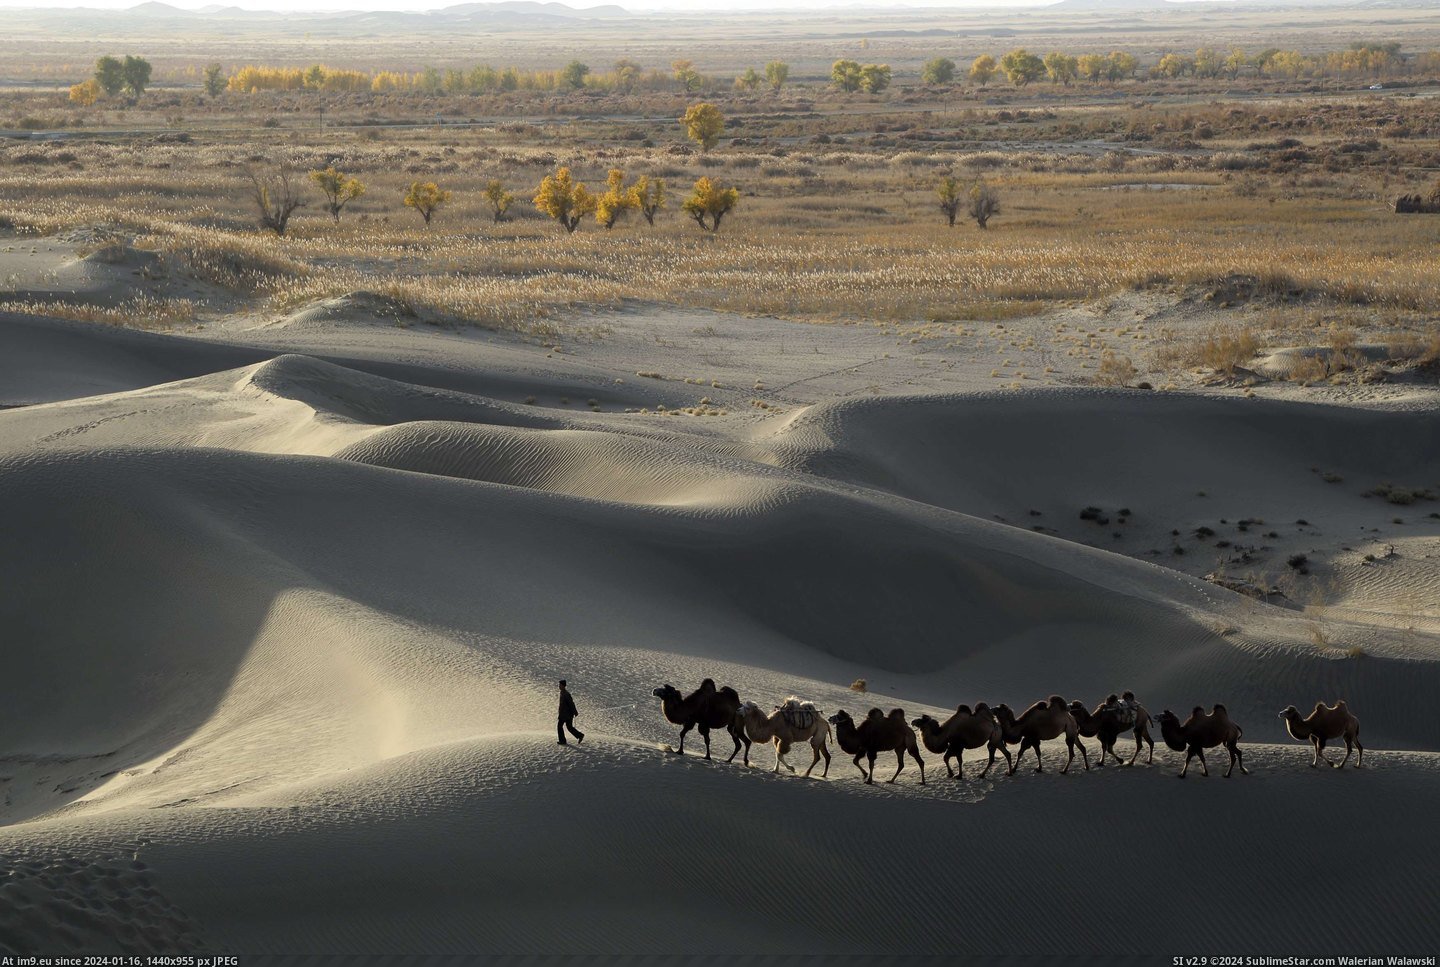 #Man #Desert #Edge #Region #3500x2333 #Taklamakan #Uighur #Leads #Autonomous #Camels #Xinjiang [Earthporn] A man leads camels at the edge of the Taklamakan Desert in Xinjiang Uighur Autonomous Region [3500x2333] Pic. (Изображение из альбом My r/EARTHPORN favs))